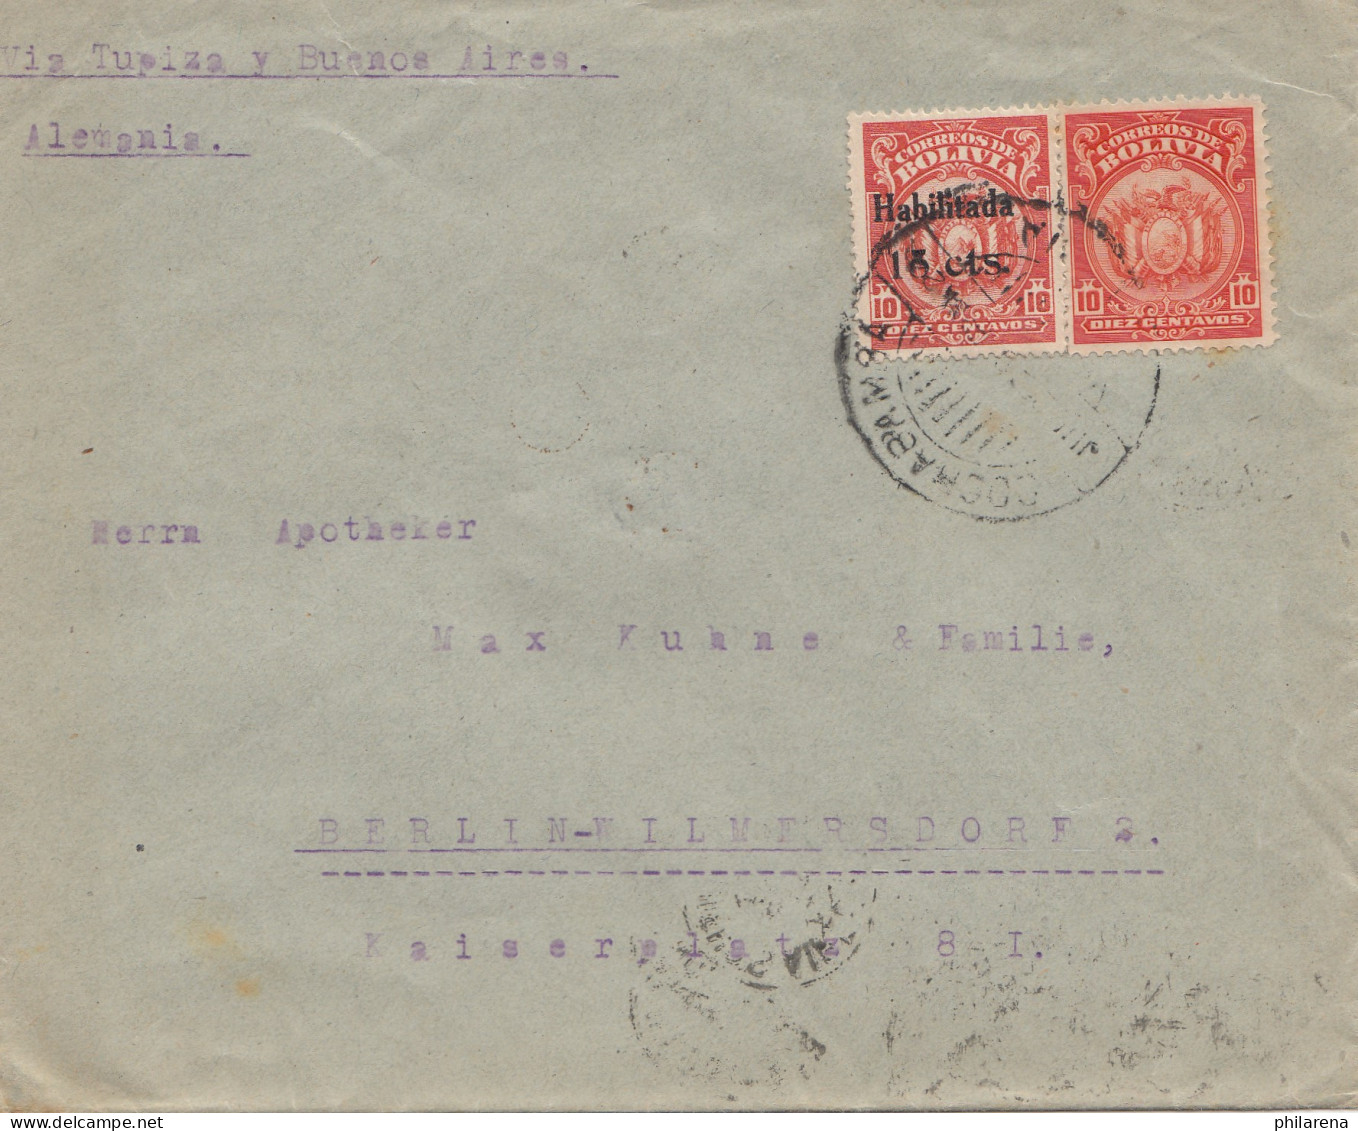 1924 Cover Cochabamba Via Buenos Aires To Berlin/Germany - Bolivie